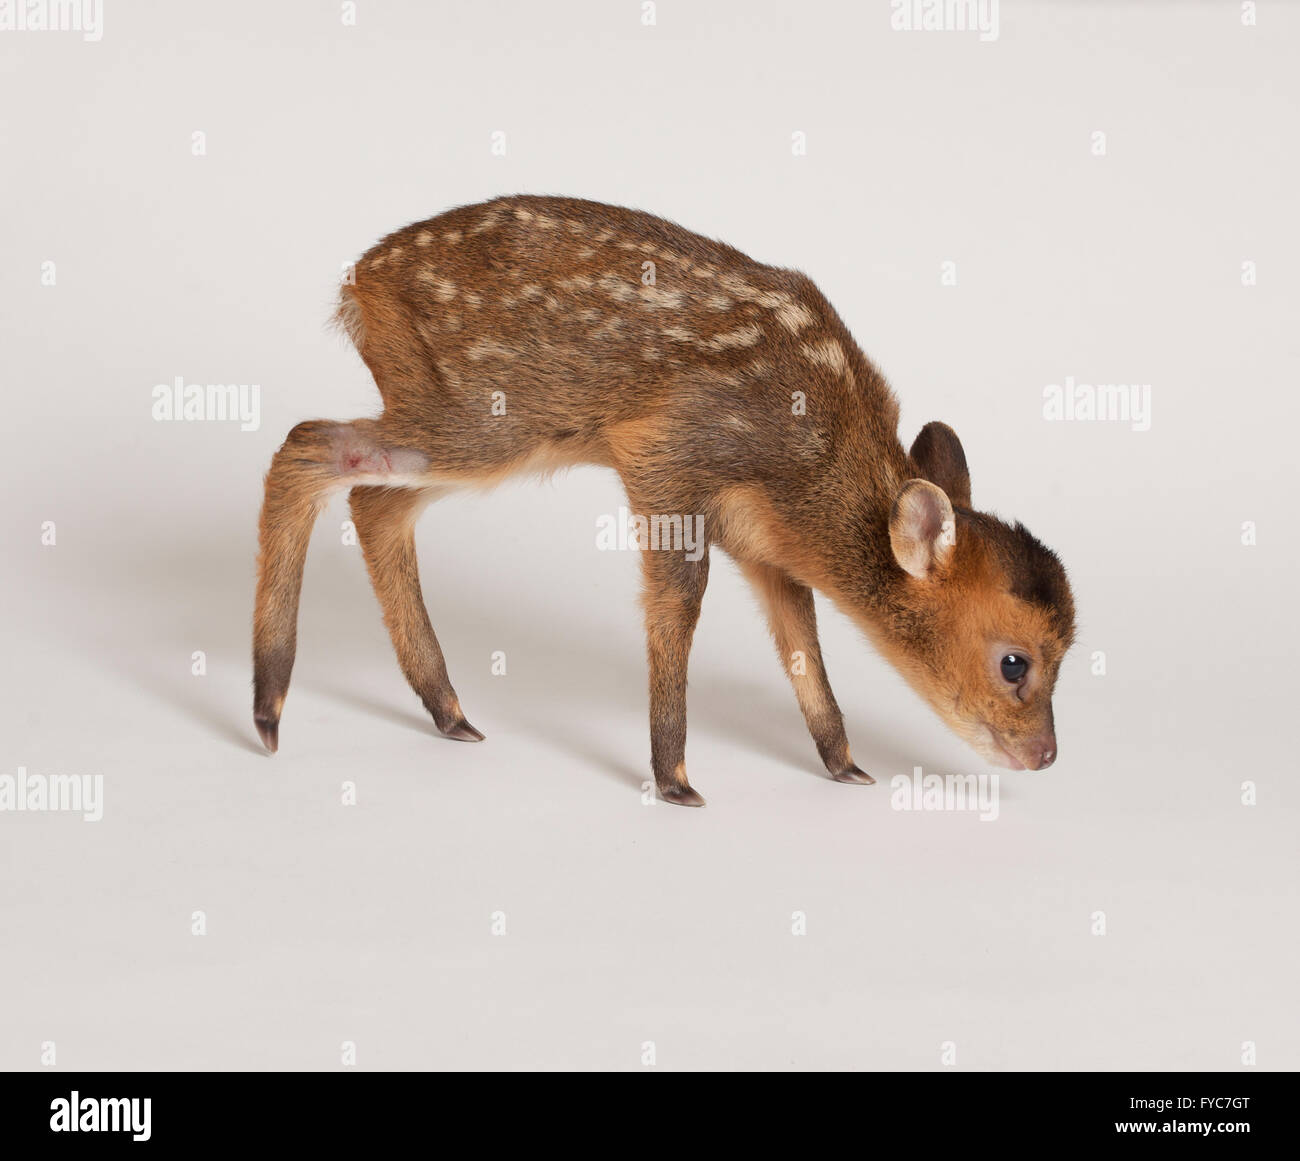 Muntjac deer, Muntiacus reevesi, Juvenile fawn standing in studio Stock Photo